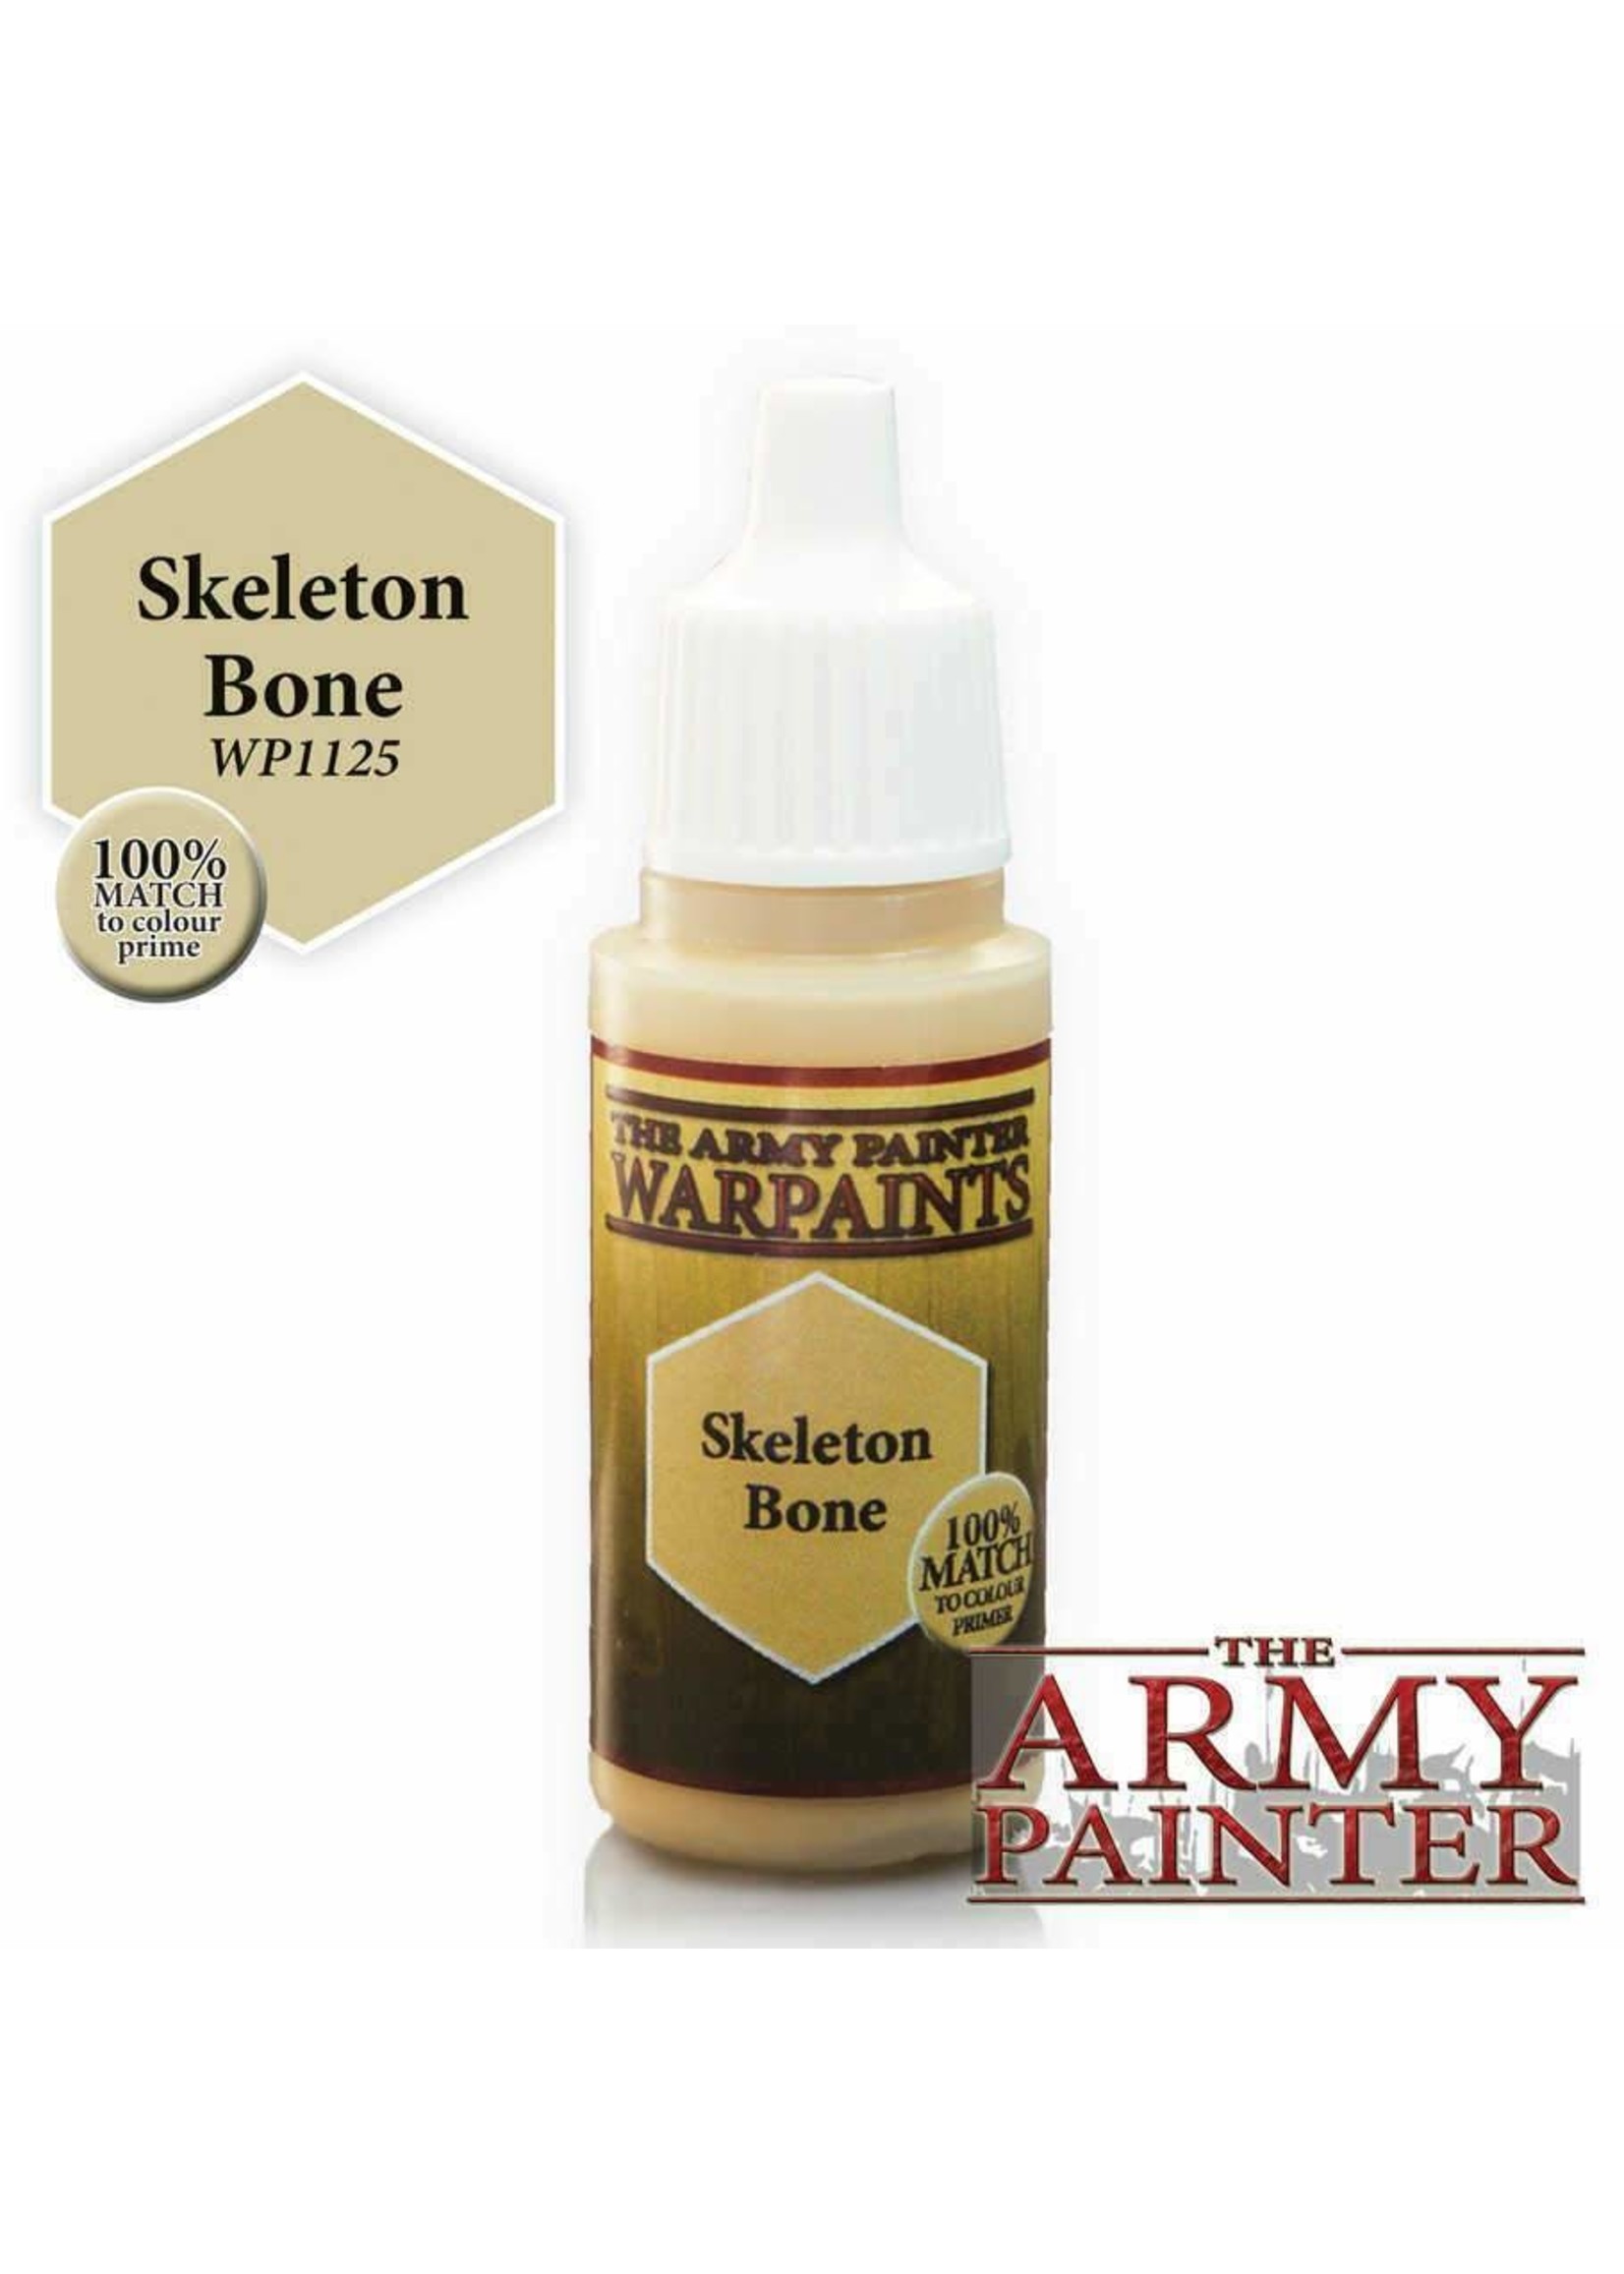 The Army Painter Acrylics Warpaints Skeleton Bone